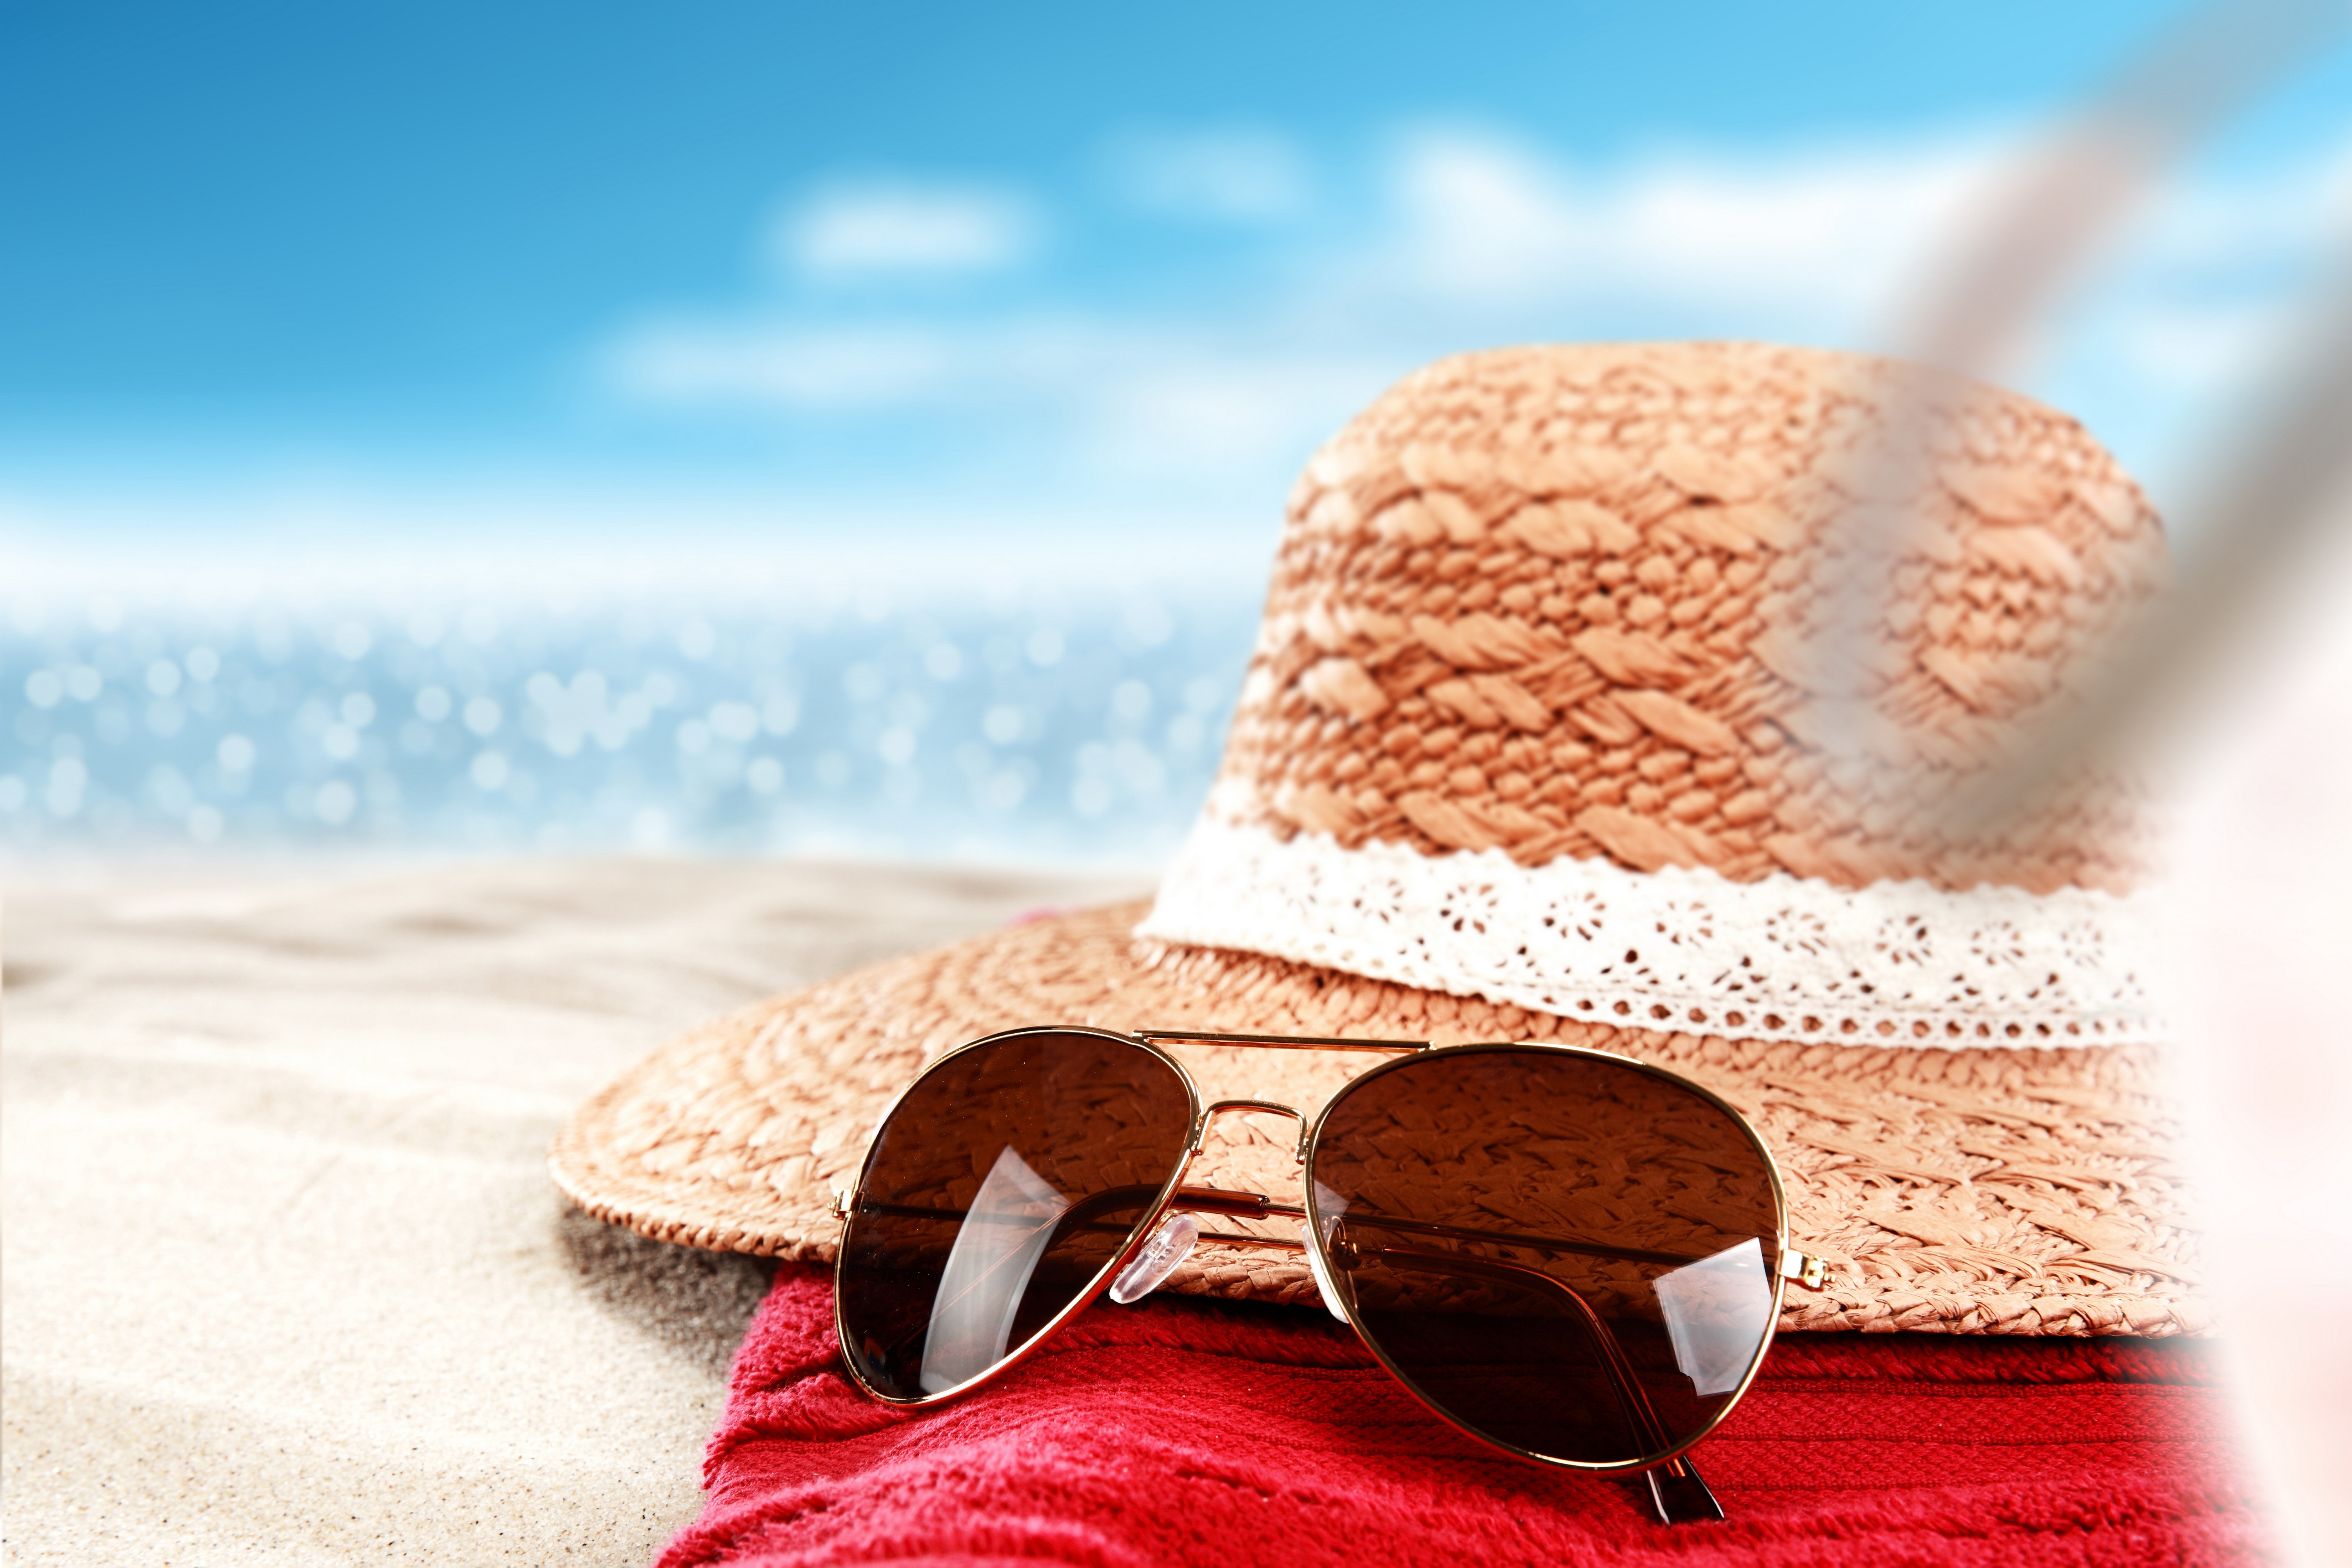 Обои шляпа. Солнечные очки на пляже. Солнечные очки на песке. Летние очки. Шляпа на море.